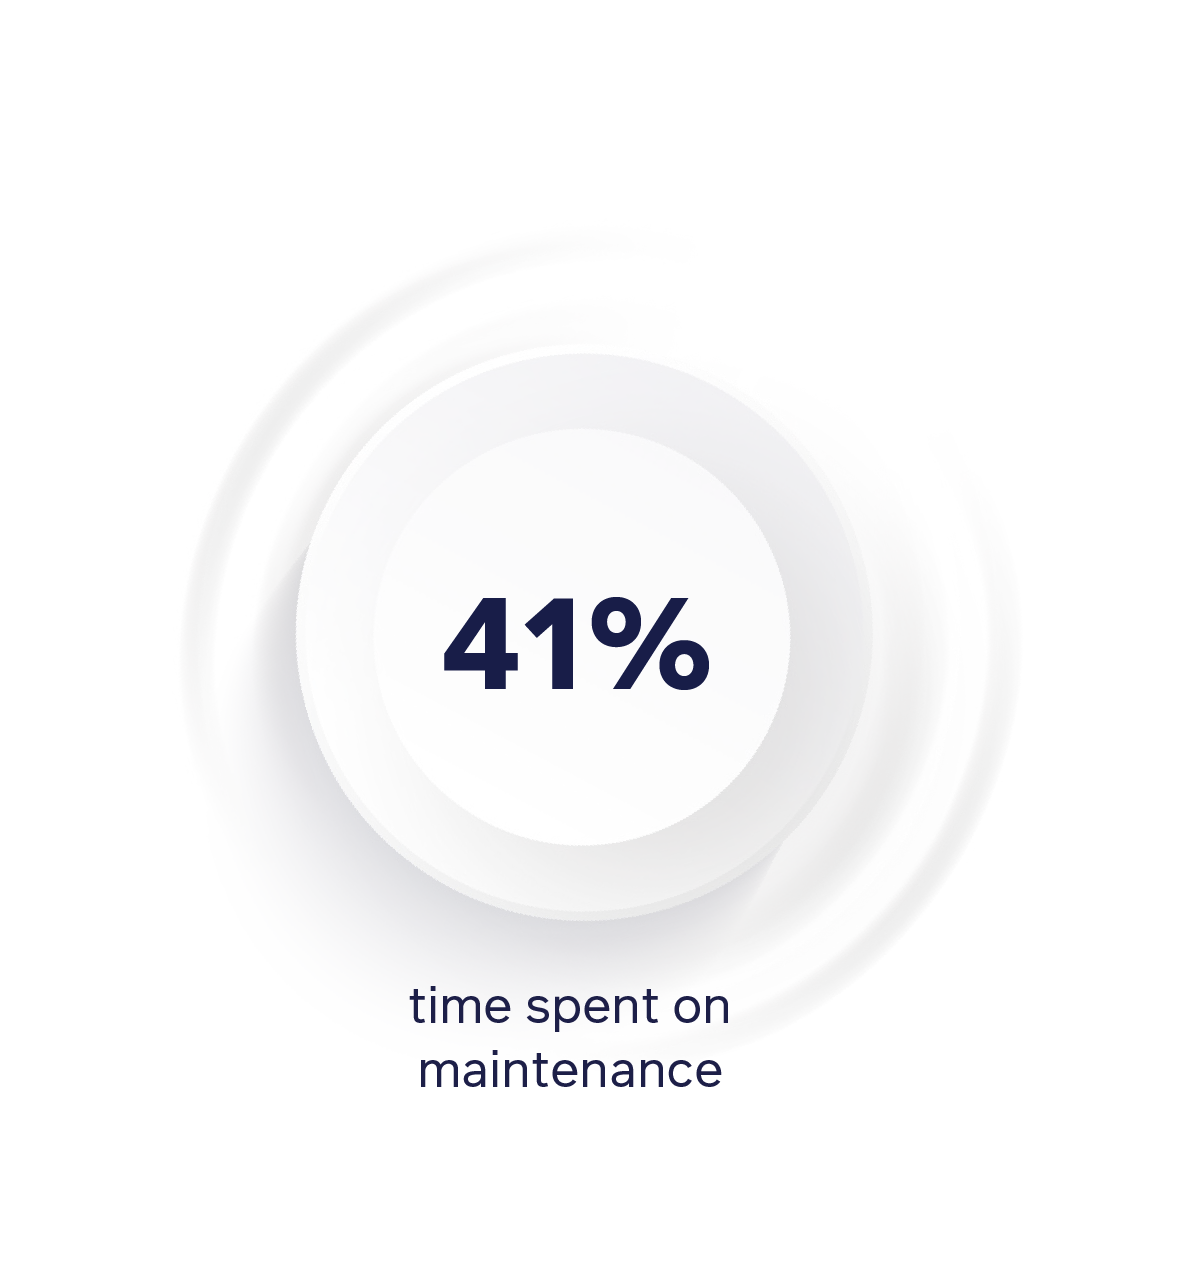 41% time spent on maintenance